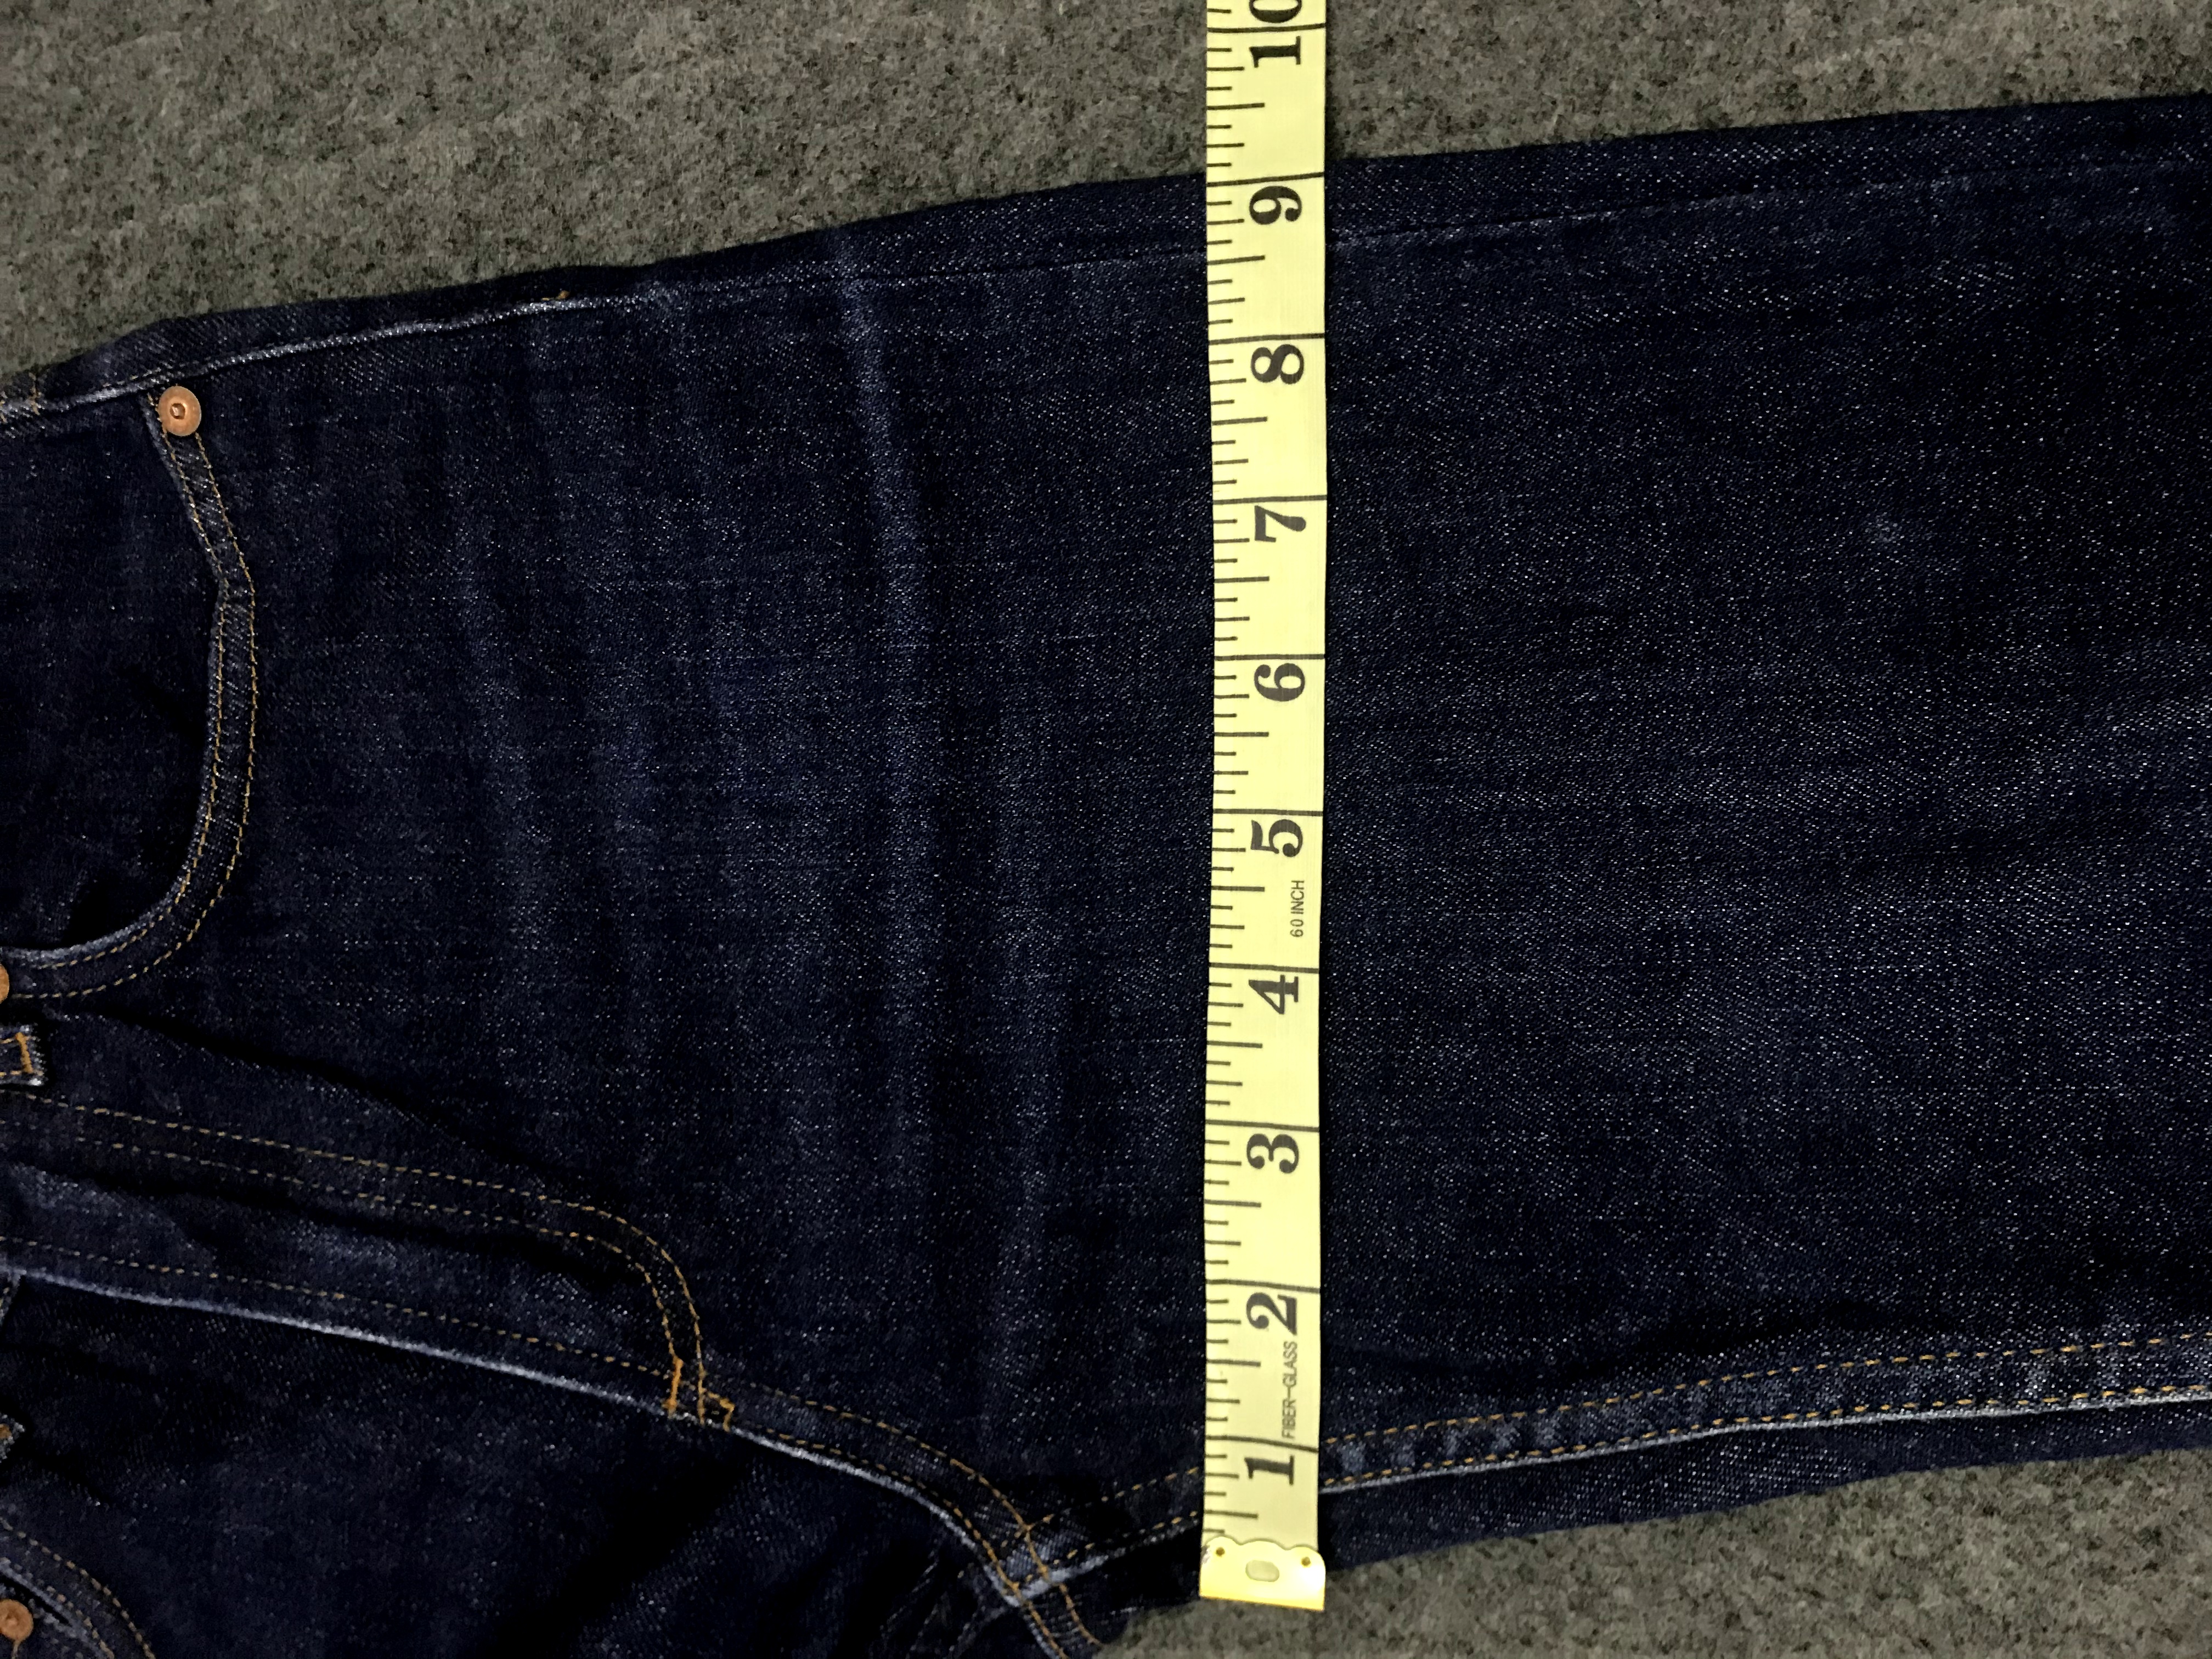 Acne Studios Italian Designer Denim Jeans Trouser Pant - 14